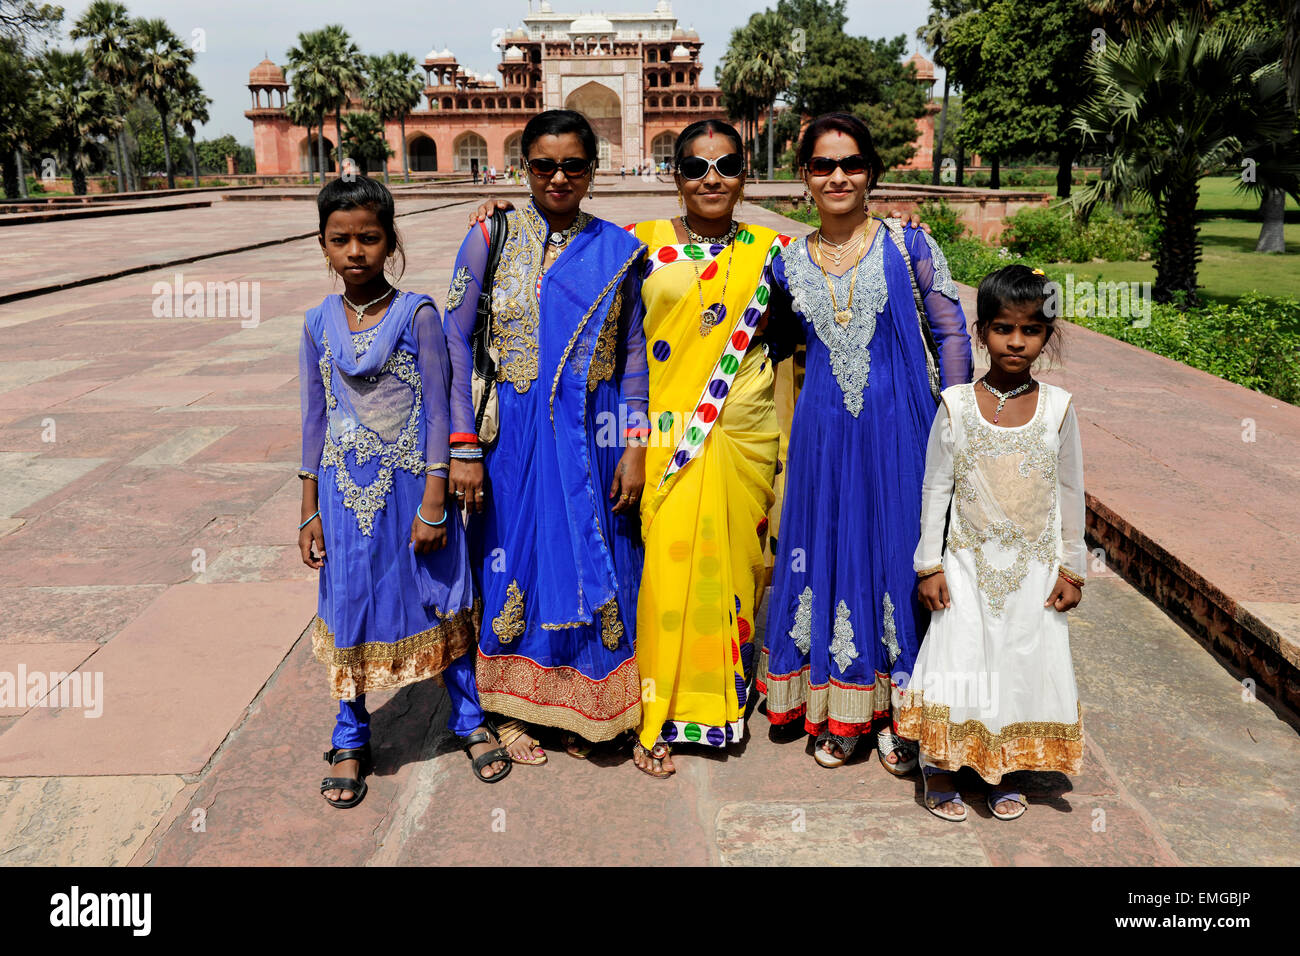 Sary. Tipico de la India. - Buscar con Google  Ropa india, India mujer,  Vestuario de la india